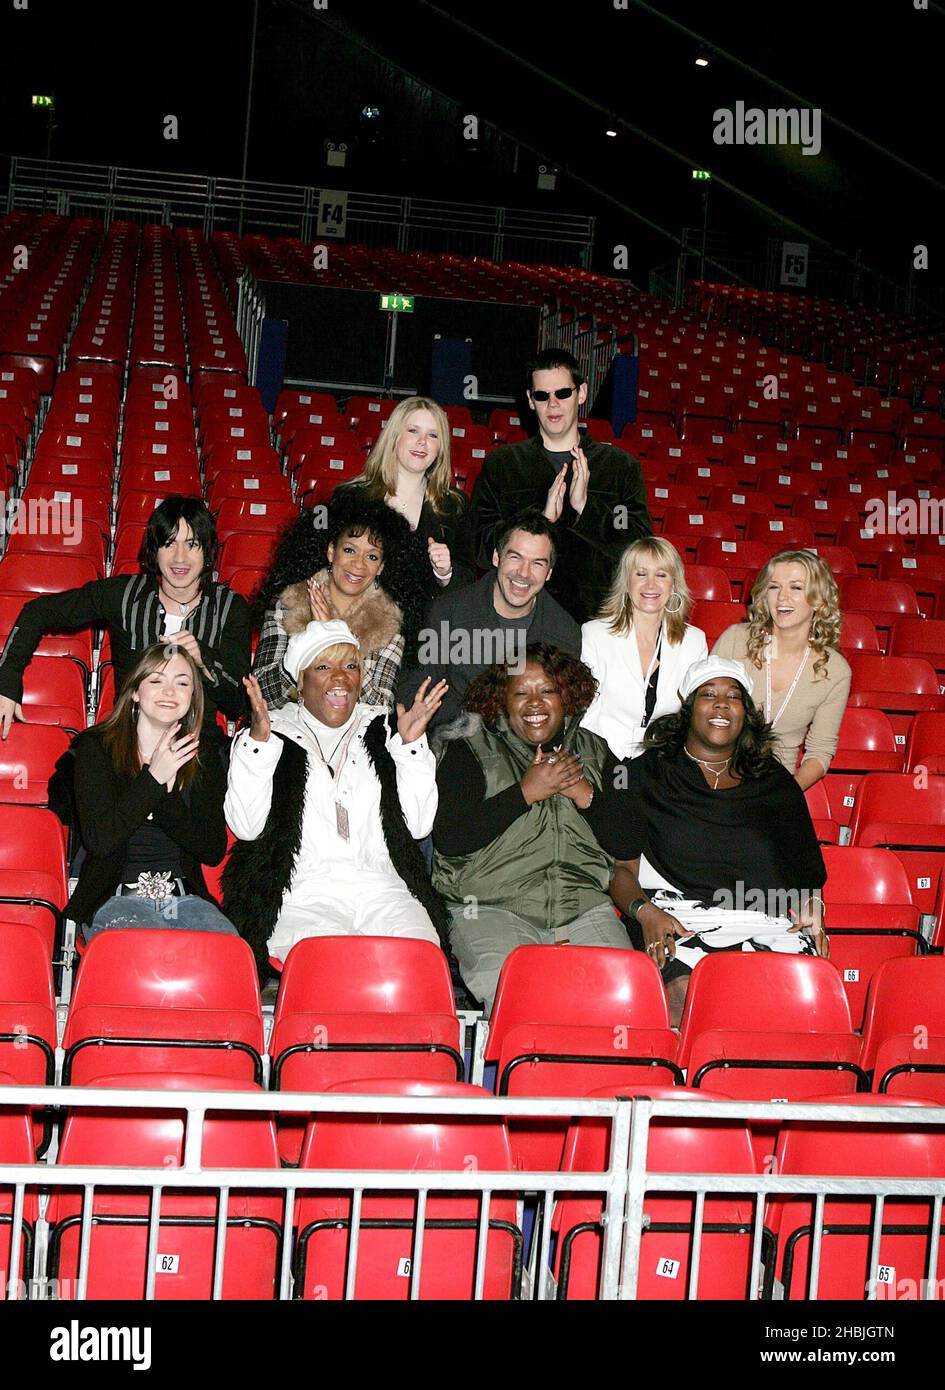 2 To Go; Tabby Callaghan; Rowetta Satchell; Steve Brookstein; Verity Keays; Roberta Howett; Cassie Compton; Voices with Soul posan en una foto antes de la primera noche de esta noche de 'X Factor Live Tour' en el Pabellón de Wembley Arena el 20 de febrero de 2005 en Londres. Foto de stock